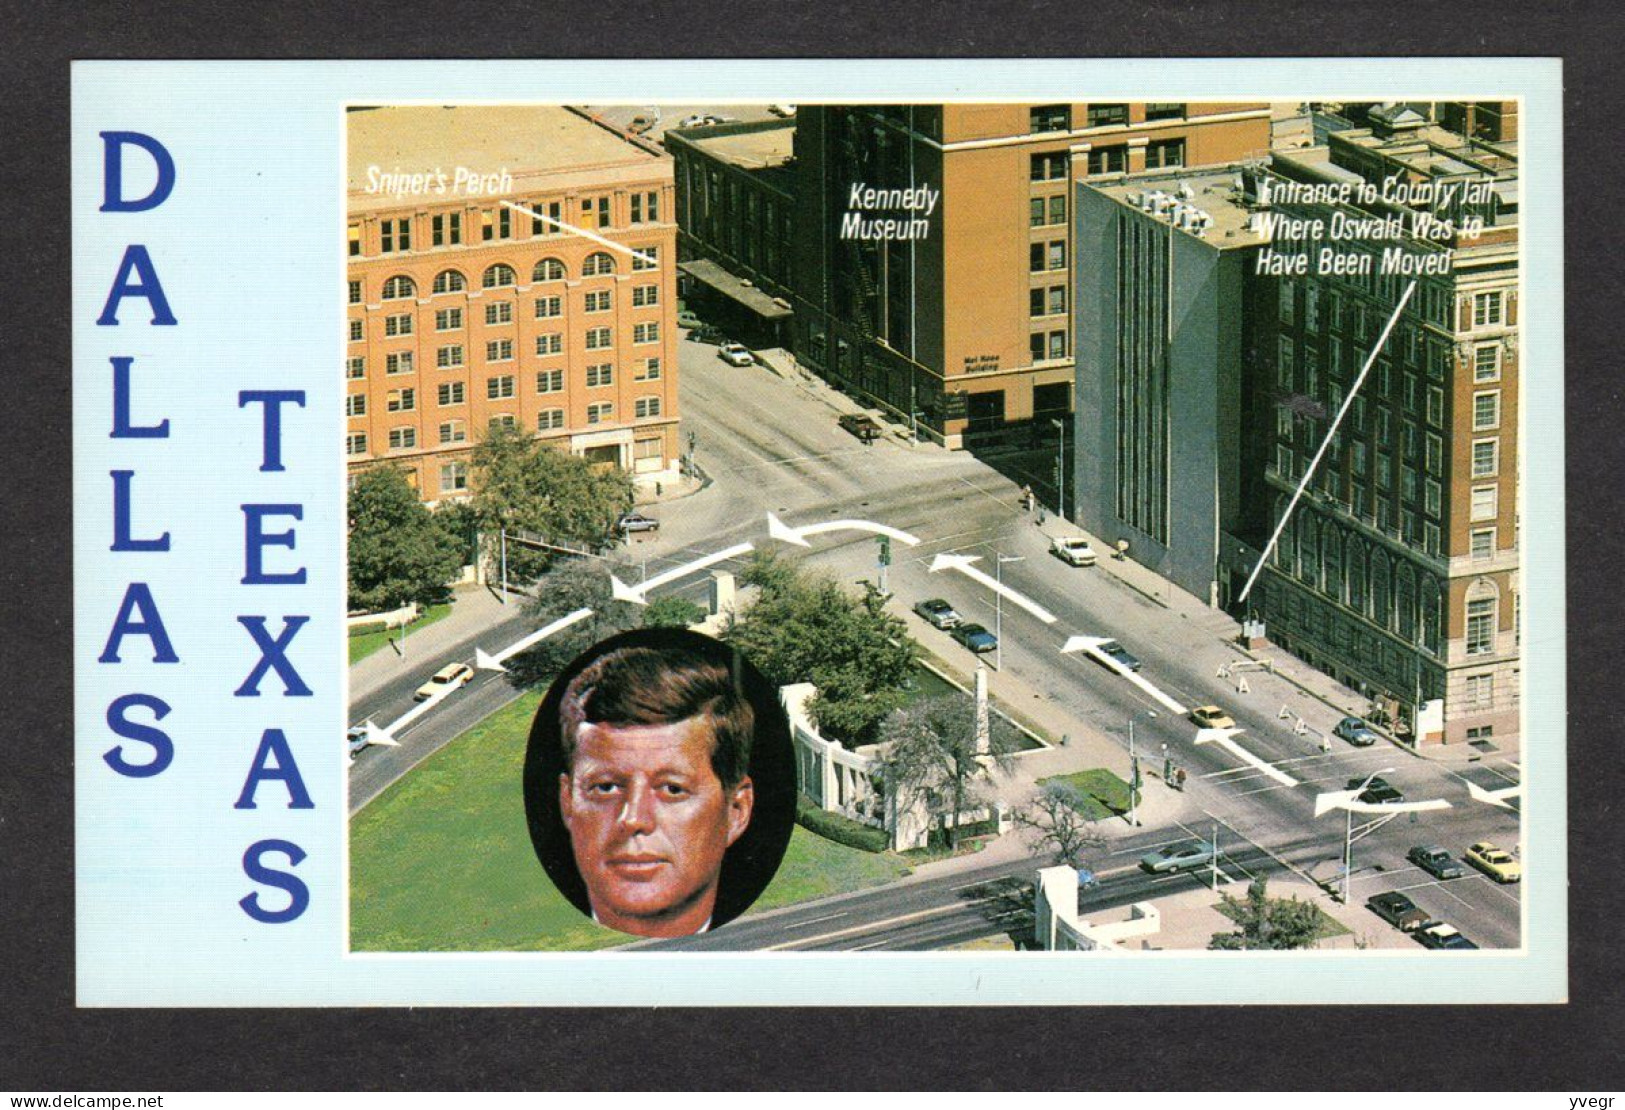 Etats Unis - Assassination Site - John F. KENNEDY November 22, 1963 Dealey Plaza, Texas - Assassinat De Kennedy - Dallas